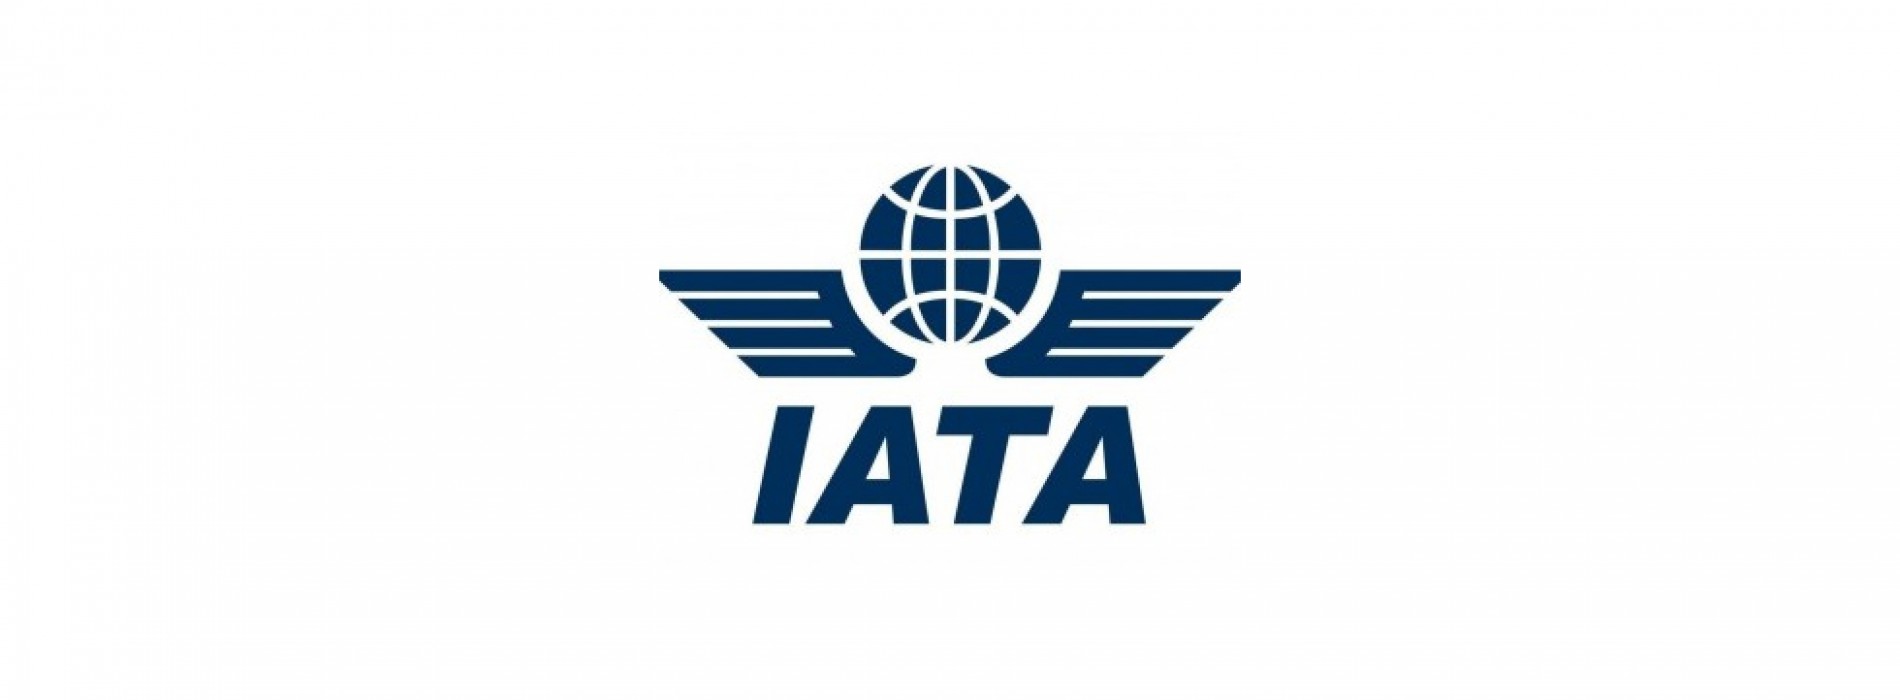 India global leader in January domestic air traffic growth: IATA